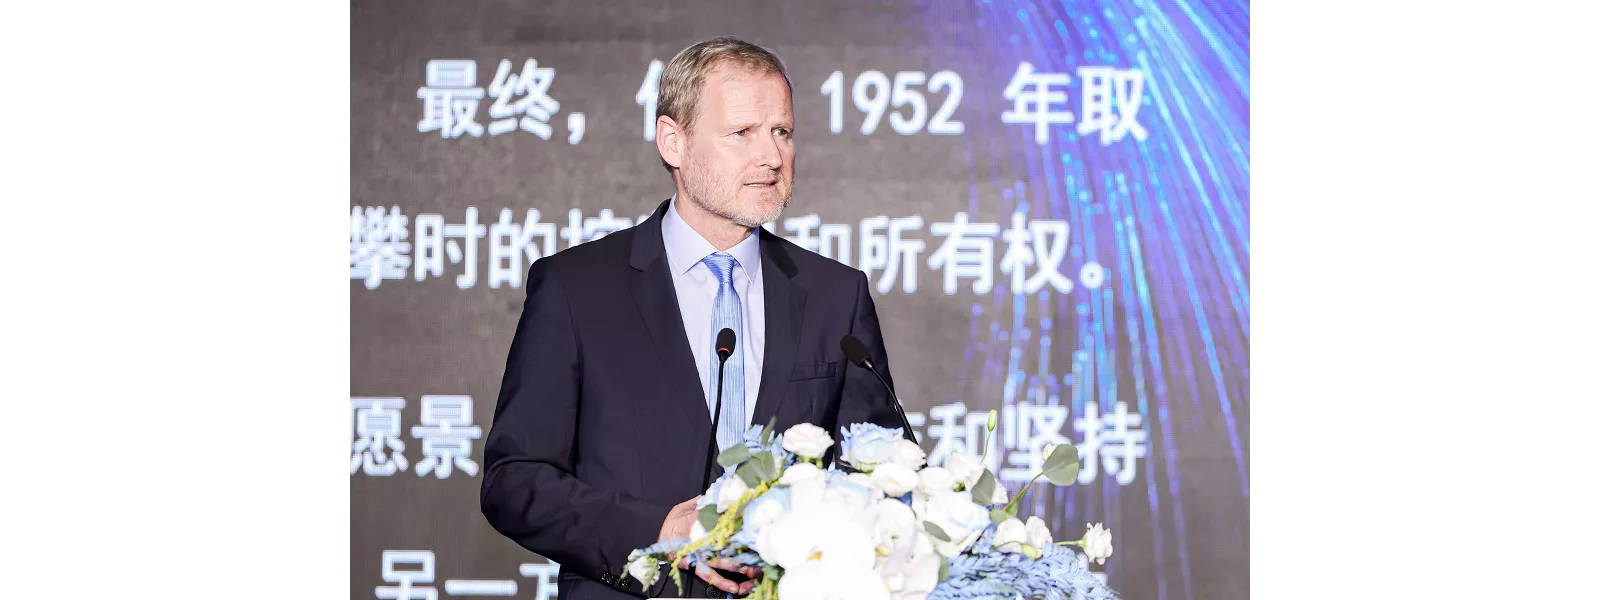 Andreas Feichtinger 在 Plansee 中国建厂十周年庆典上致辞